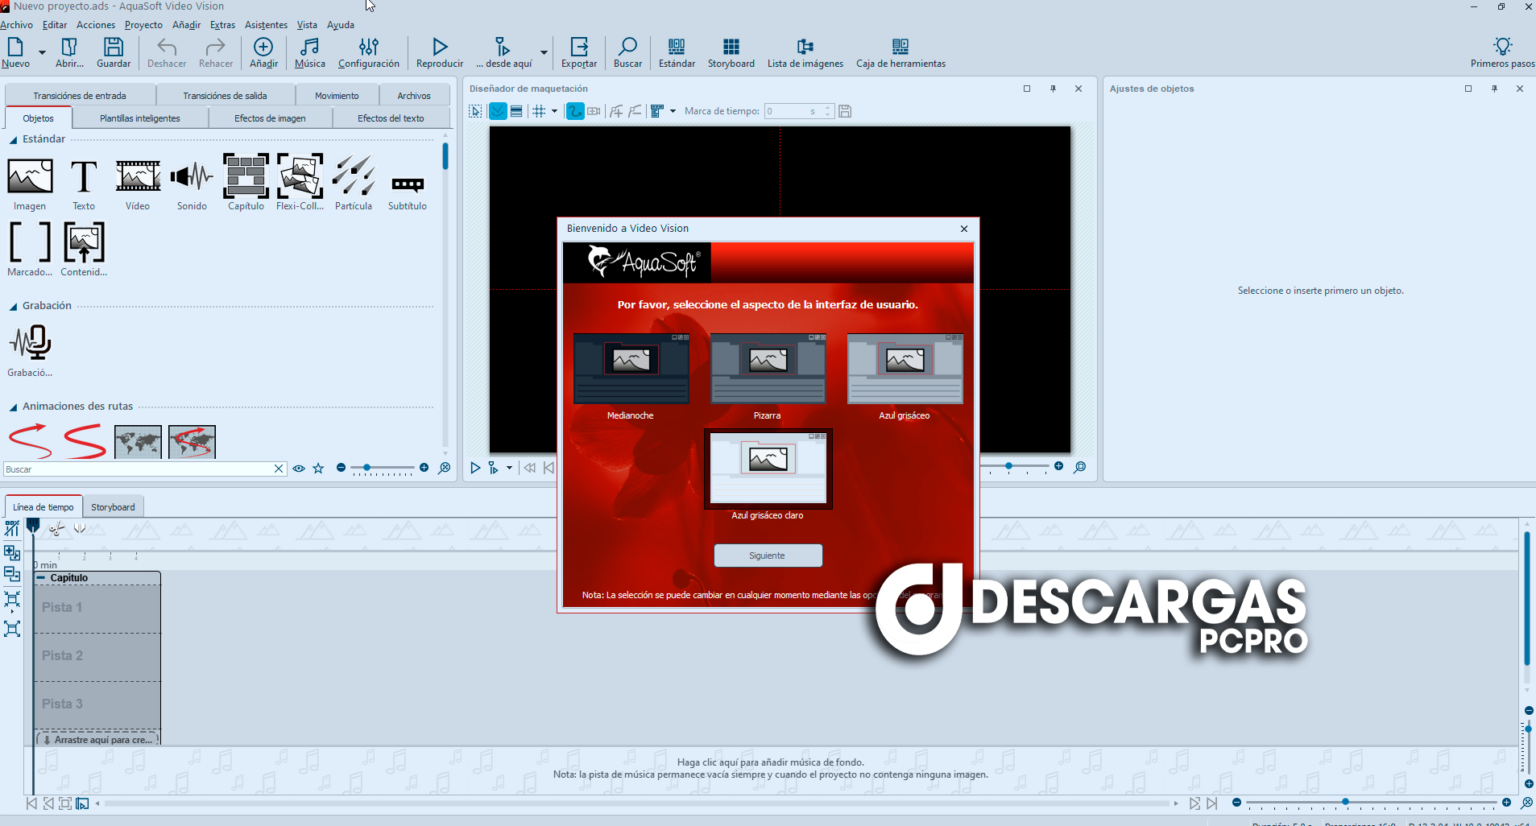 download the new version AquaSoft Video Vision 14.2.11